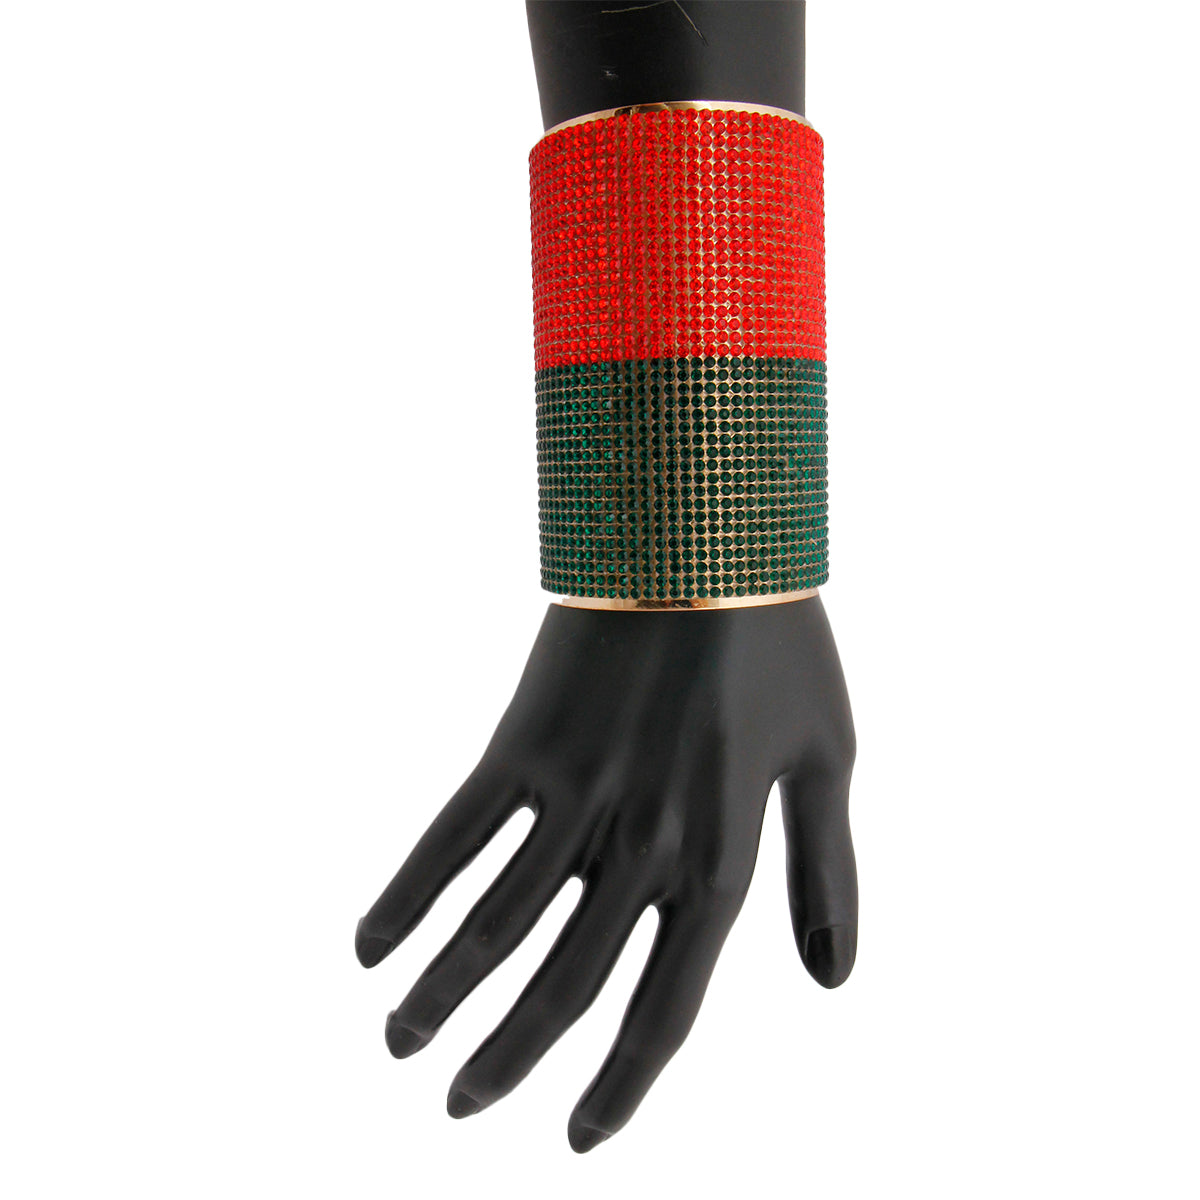 Designer Style Red and Green Rhinestone Cuff Bracelet